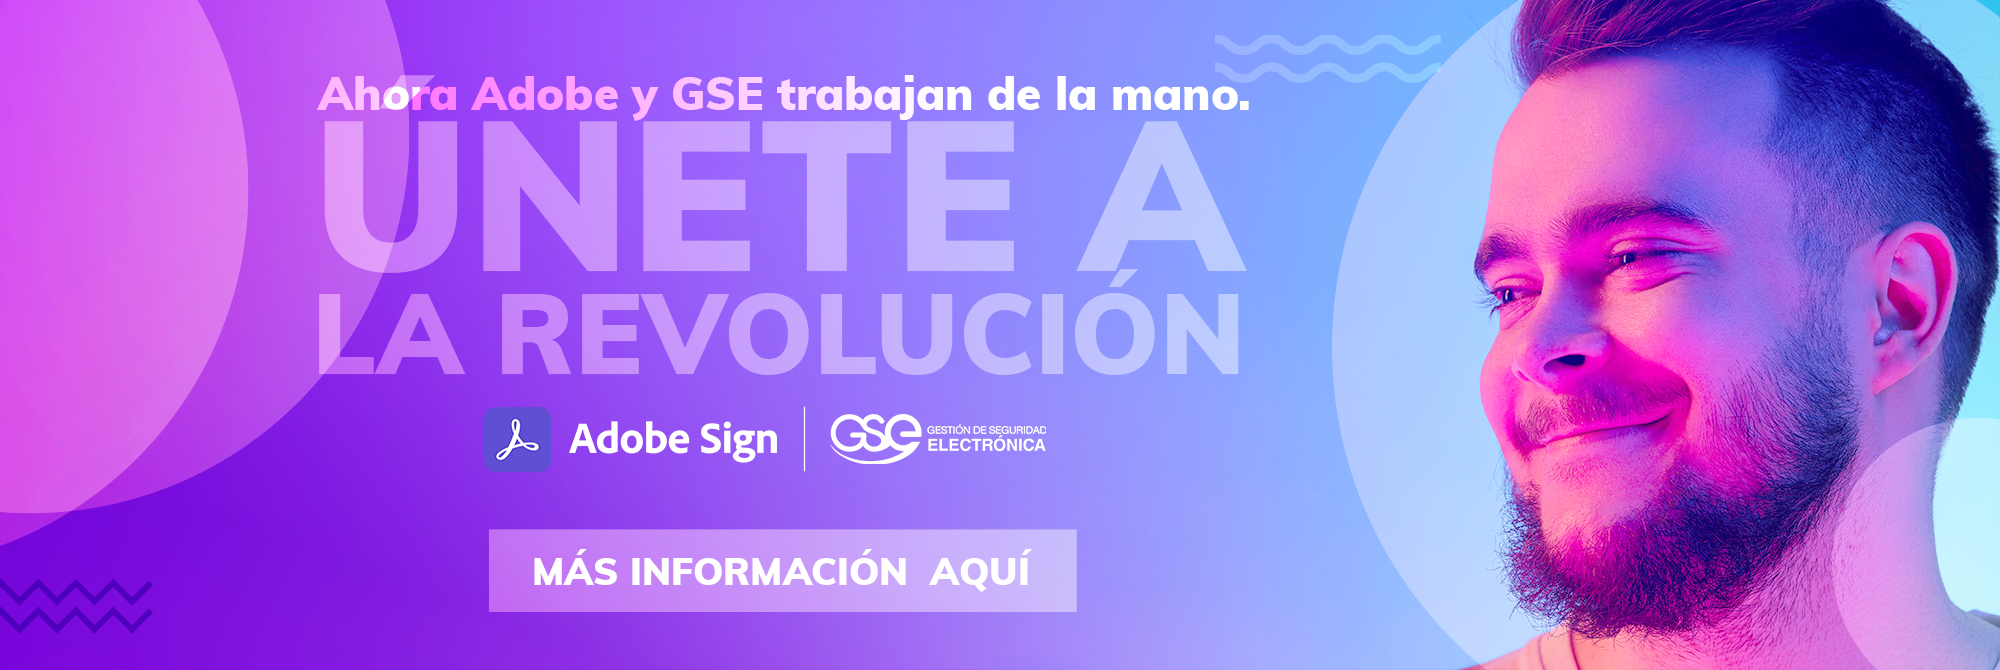 Banner-GSE-Adobe_2